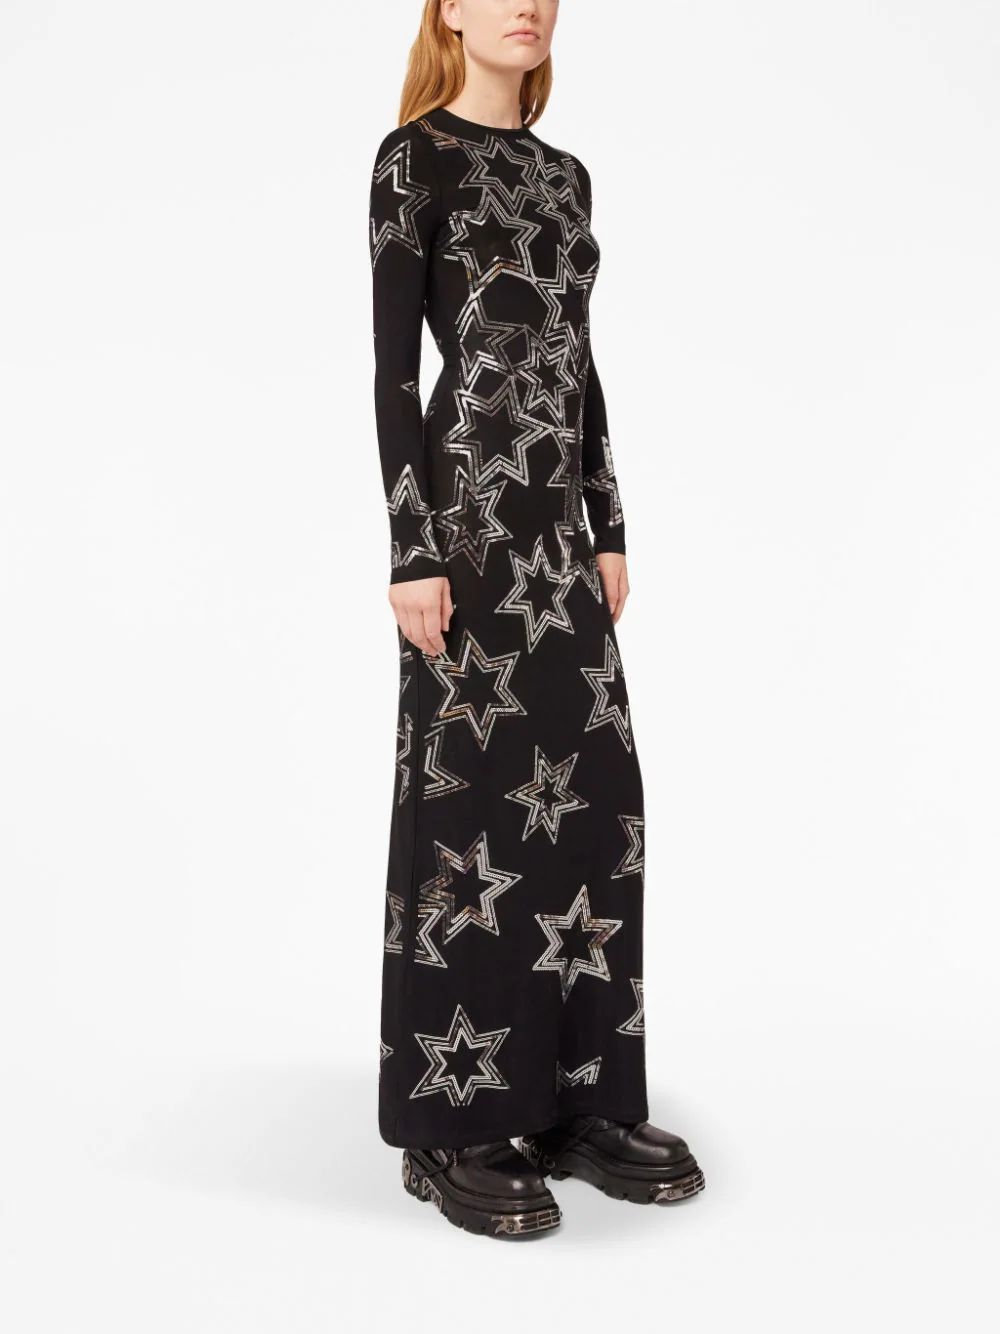 sequin-embellished star dress | Farfetch Global